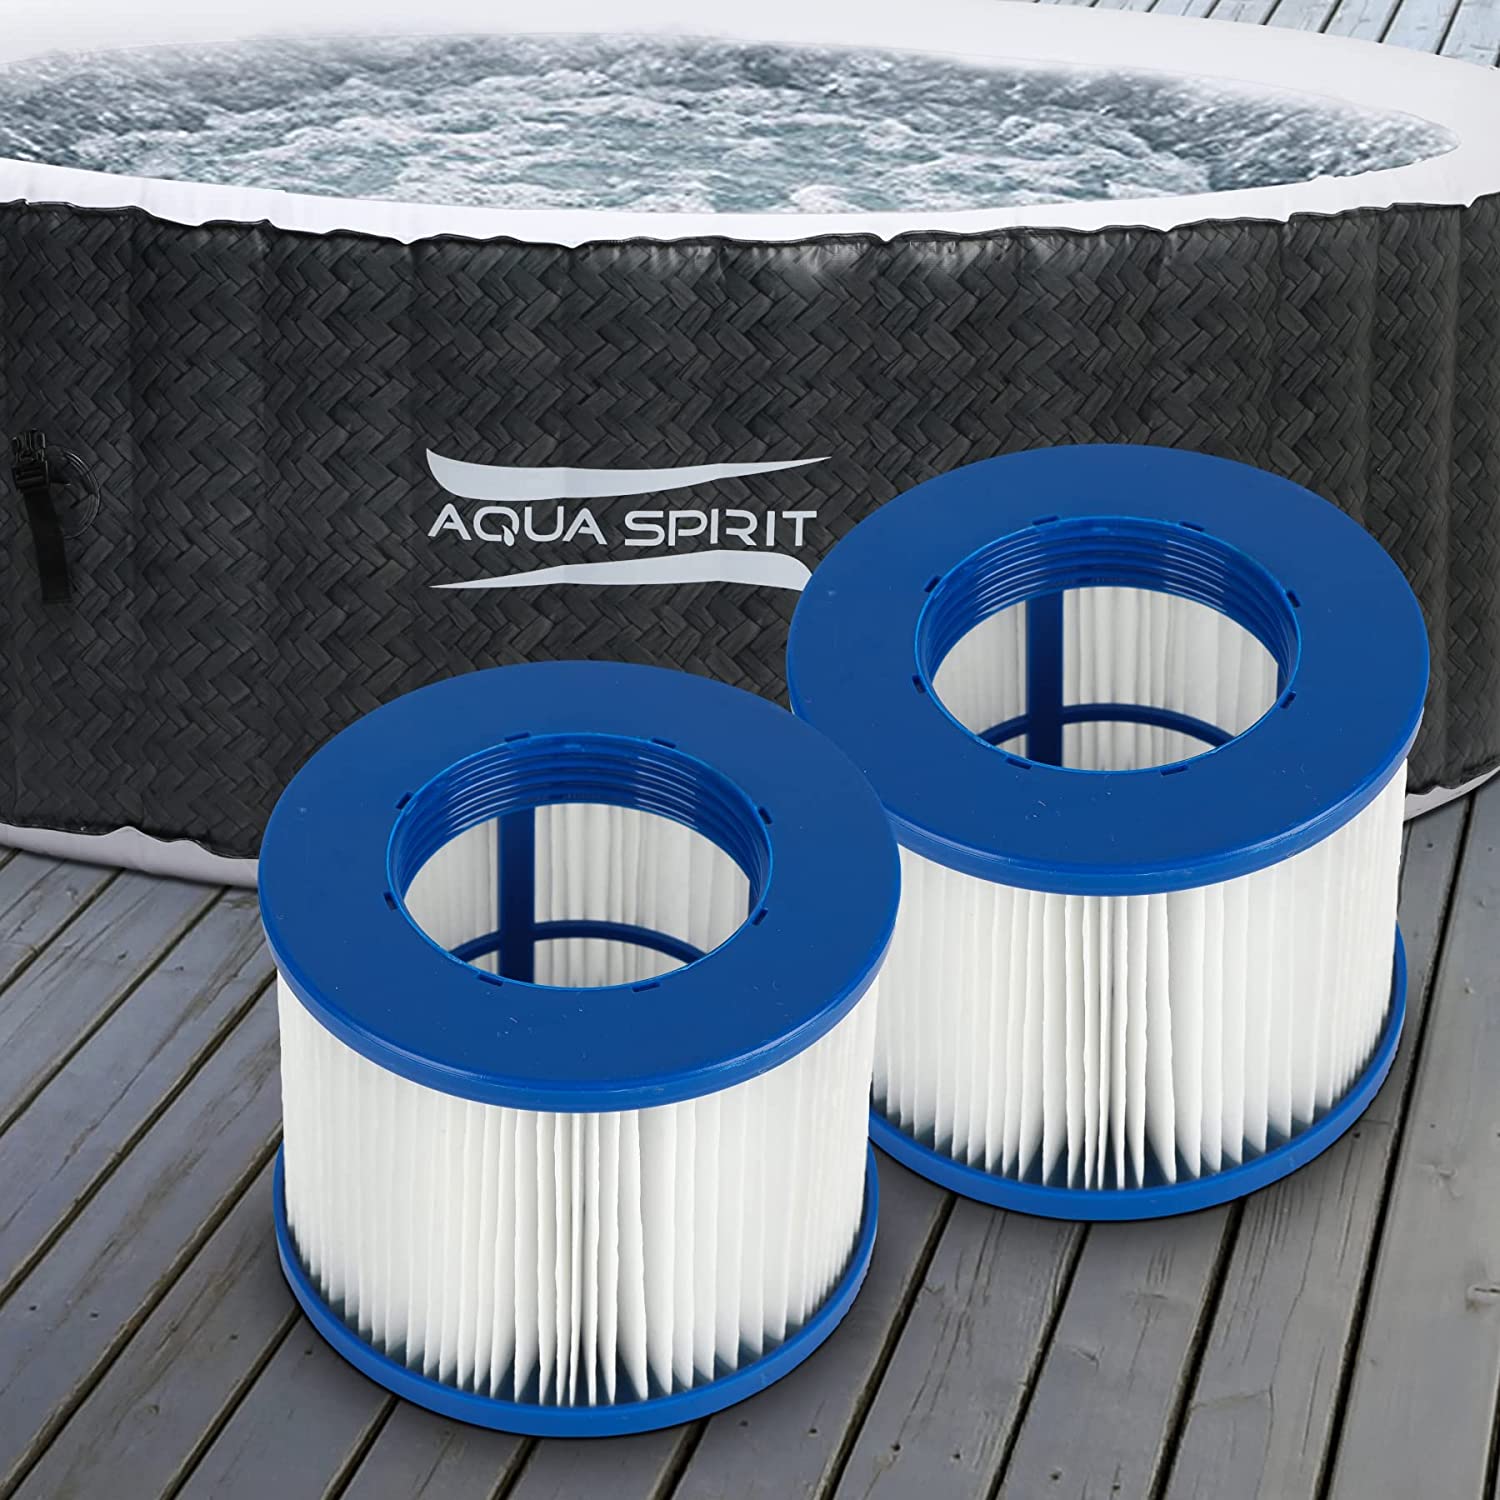 Aqua Spirit 2 Pack Hot Tub Replacement Antibacterial Filter Cartridges for Hot Tub Cleaning and Maintenance - Aqua Spirit iSUPs UK